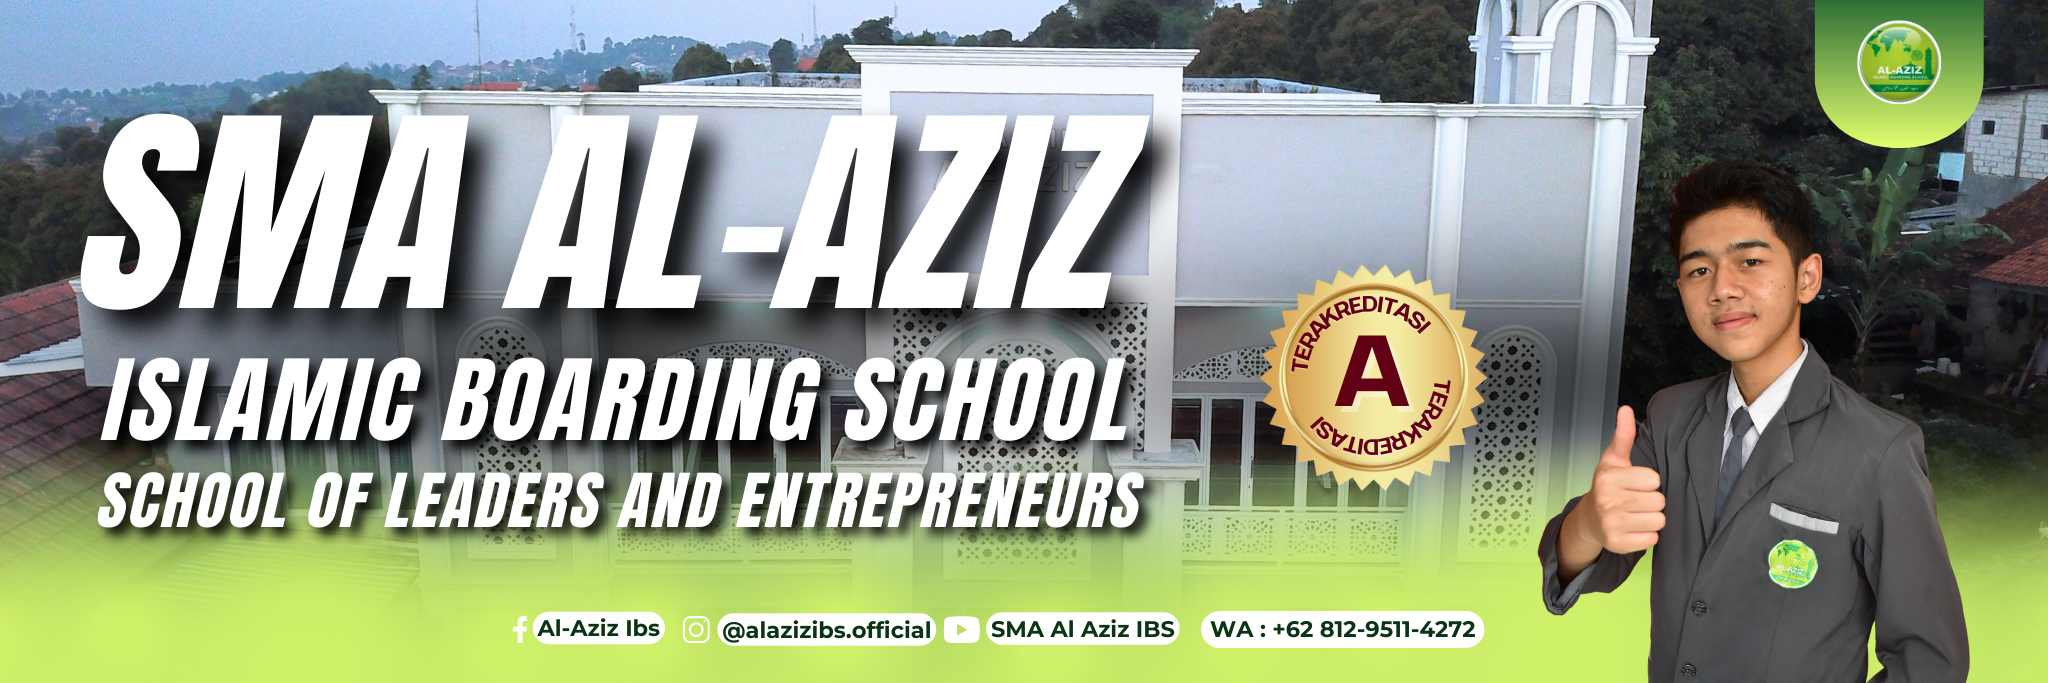 sma_al_aziz_islamic_boarding_school